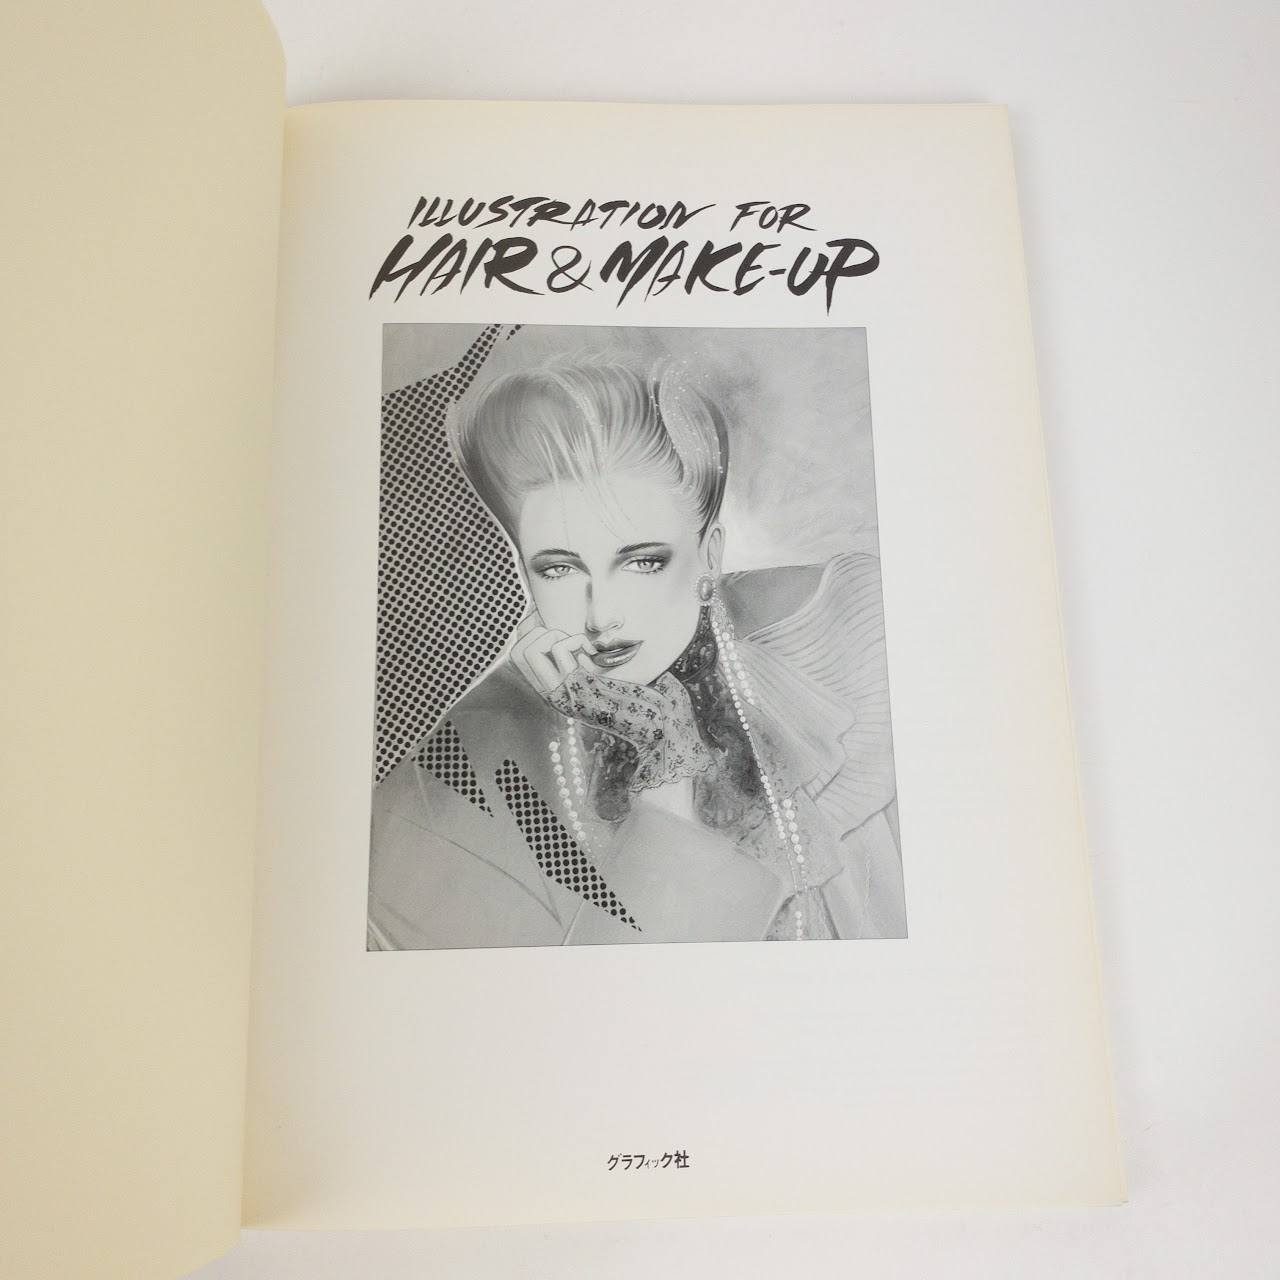 Kojiro Kumagai 1980s "Illustration for Hair & Make-Up" Book